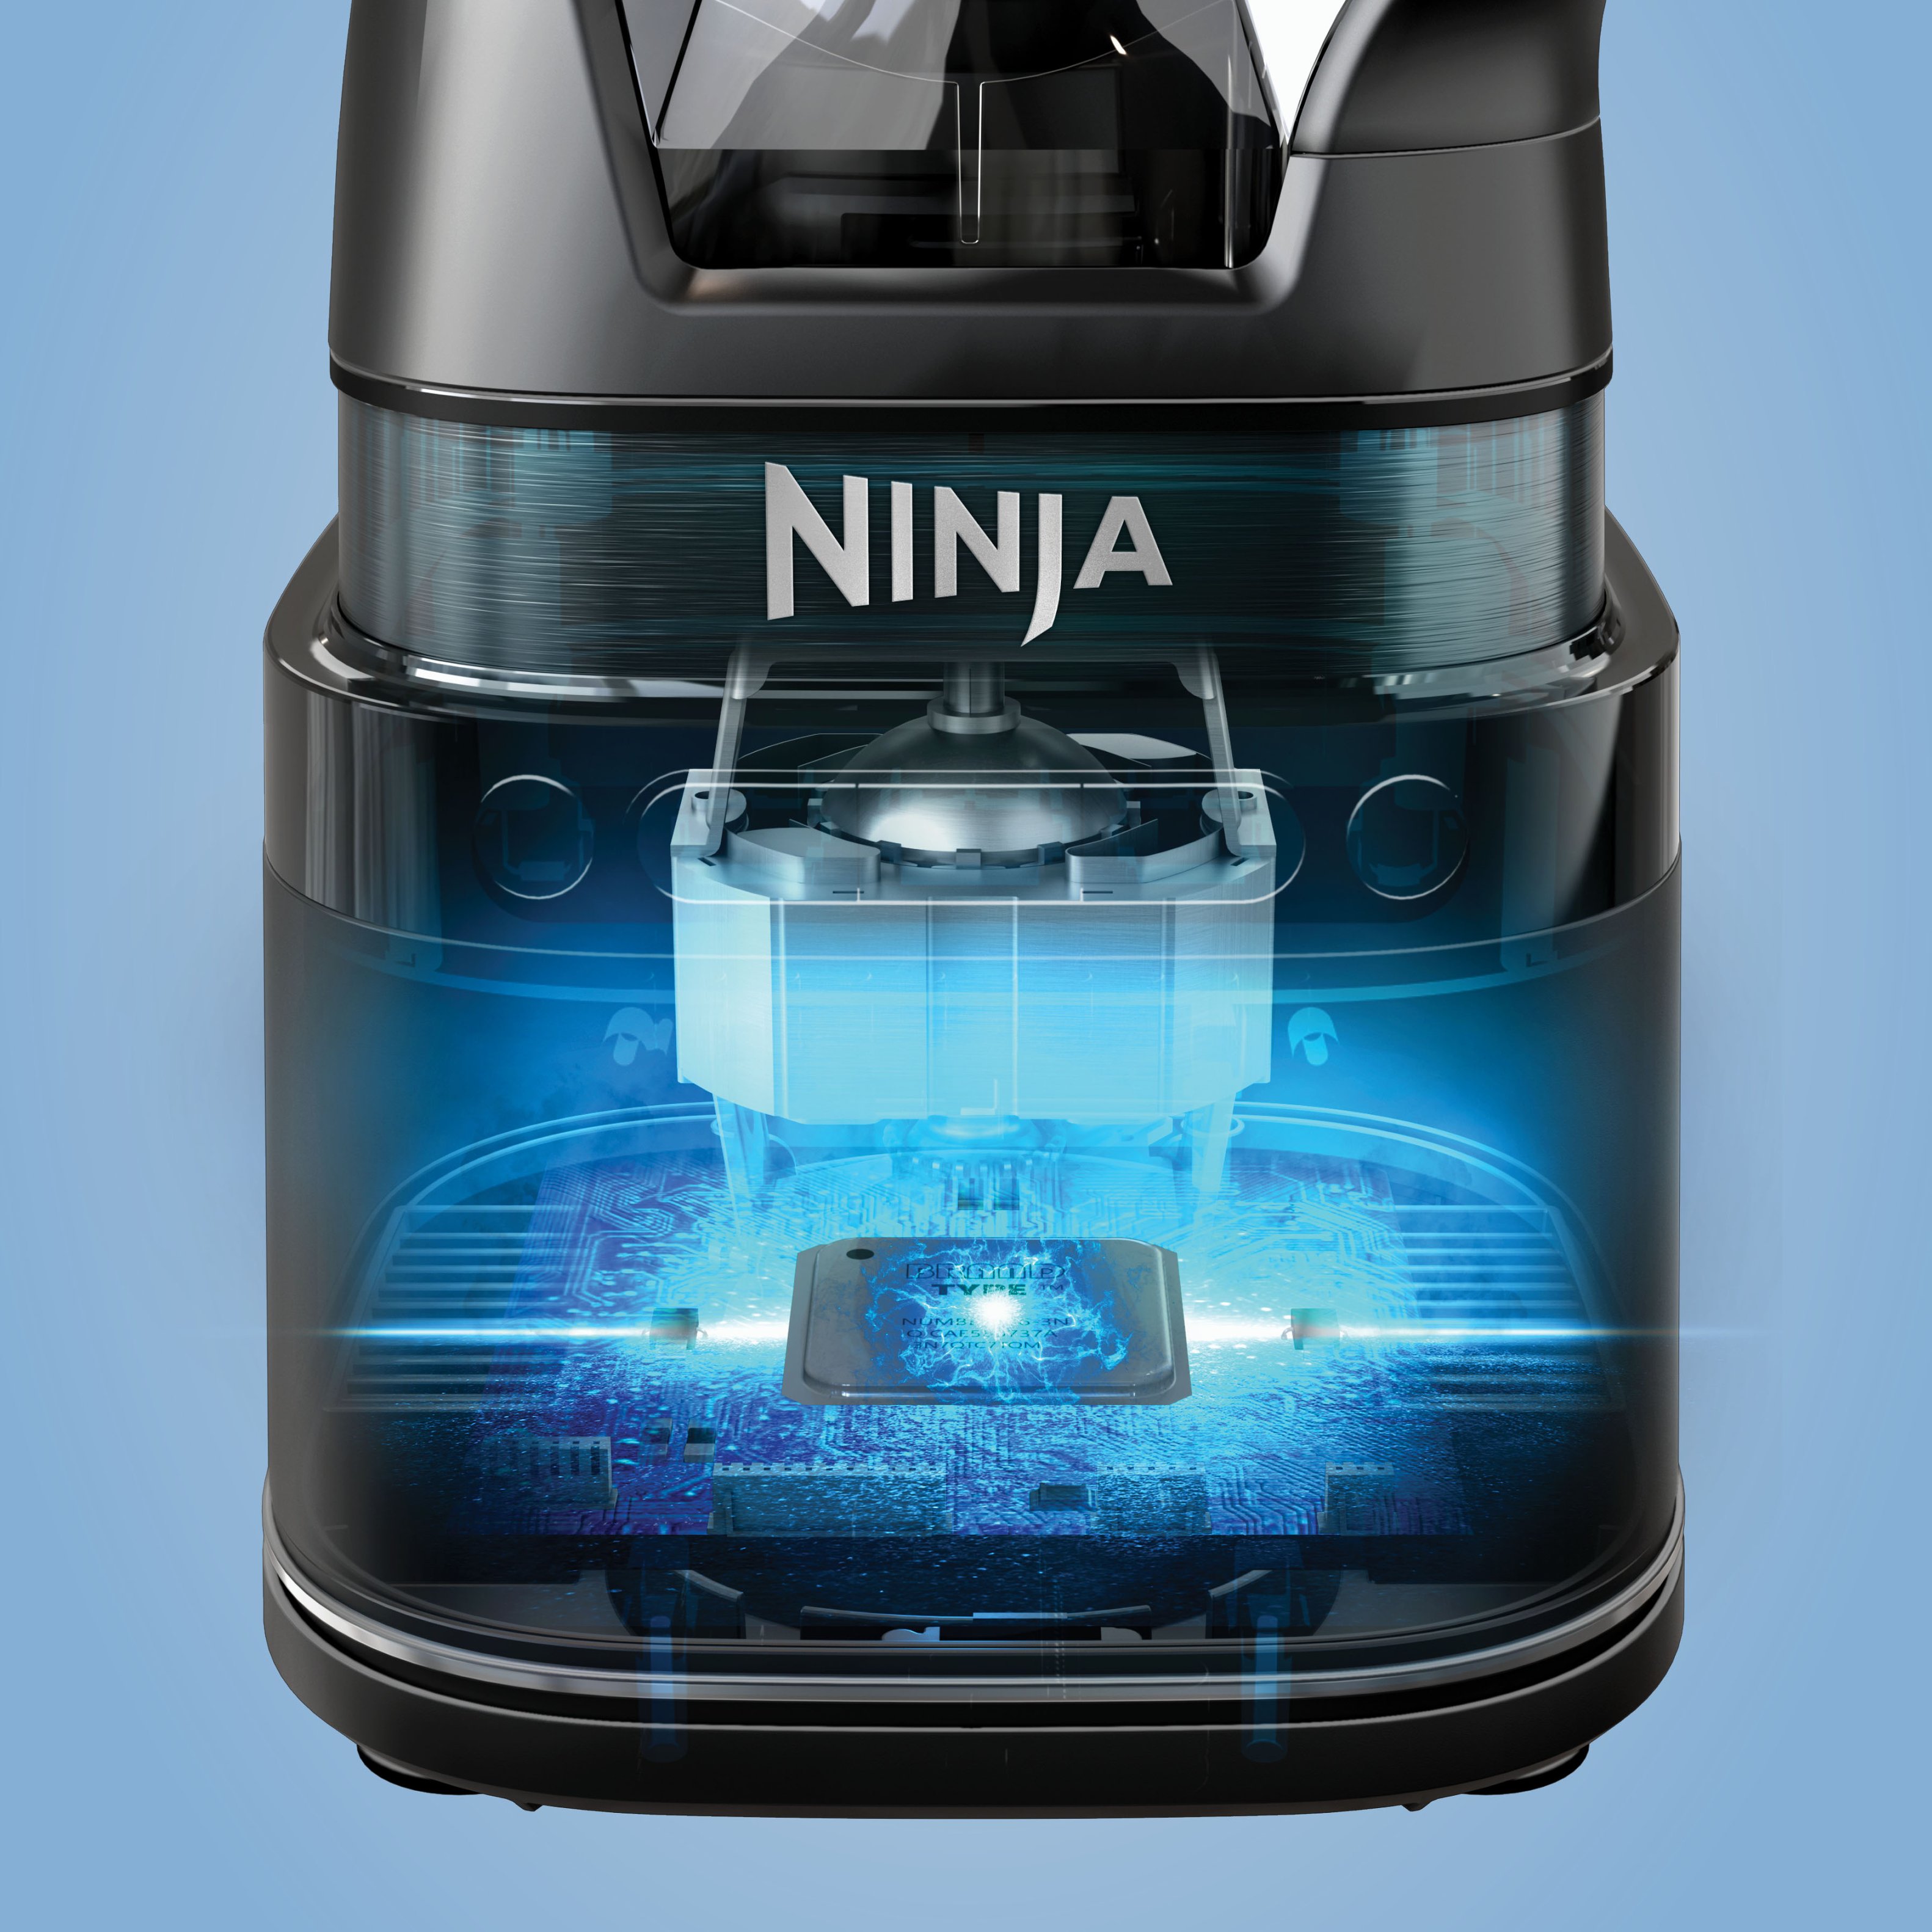 NINJA Detect Power 72 oz. 10-Speed Stainless Blender Pro Traditional Blender  with BlendSense Technology - TB201 TB201 - The Home Depot